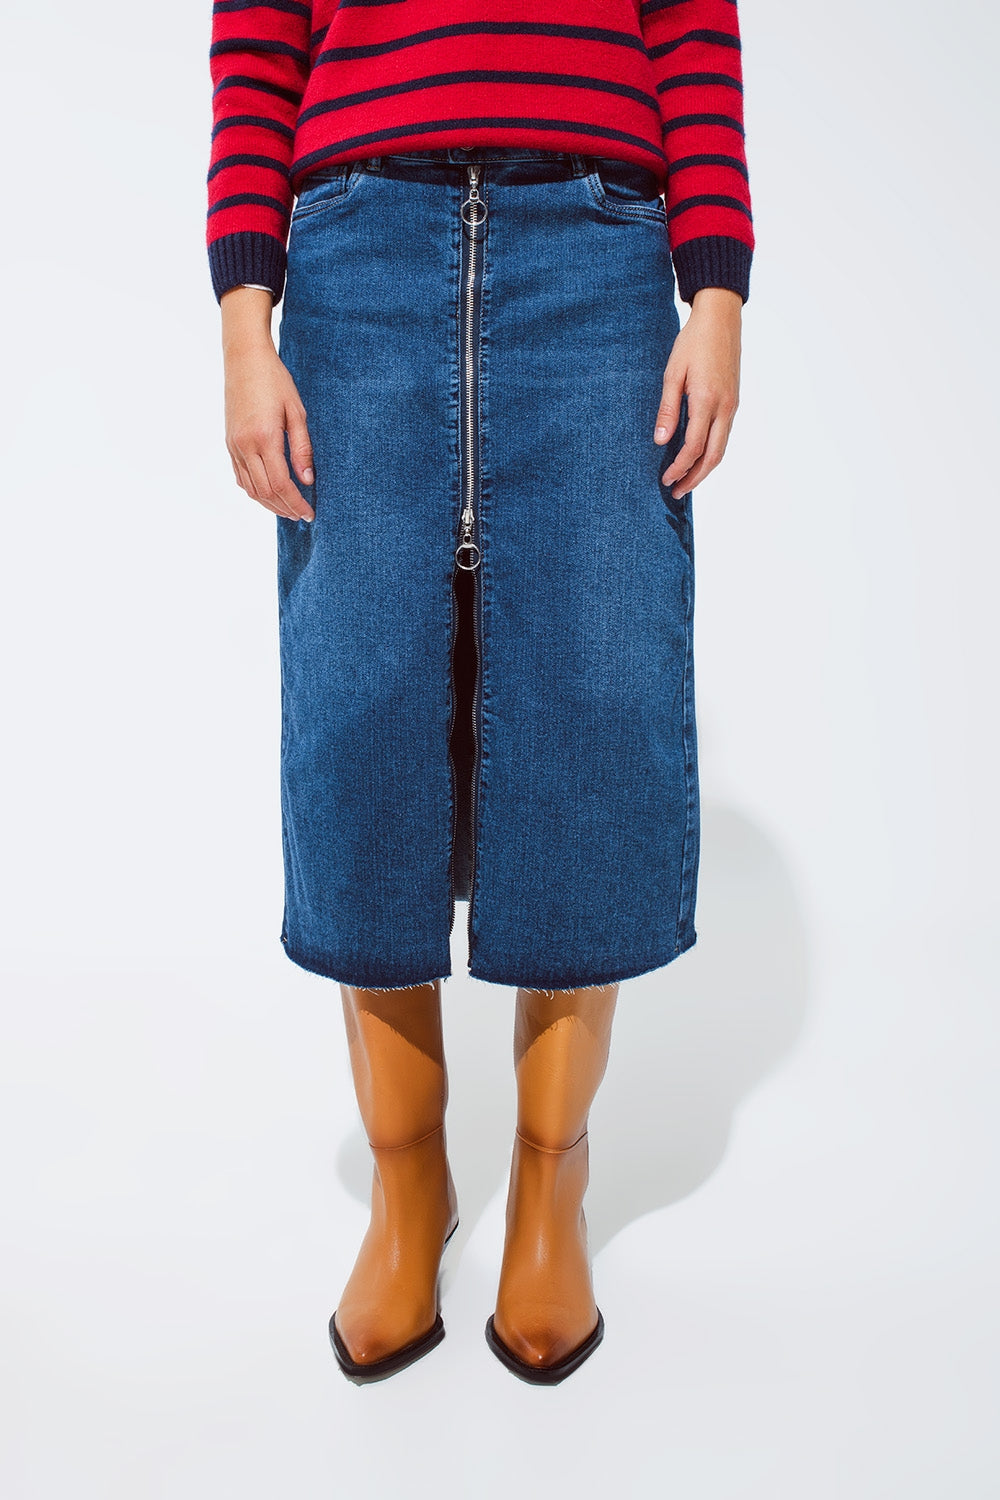 Q2 Blue maxi demin skirt with a long zipper chunky zipper down the front in Medium wash